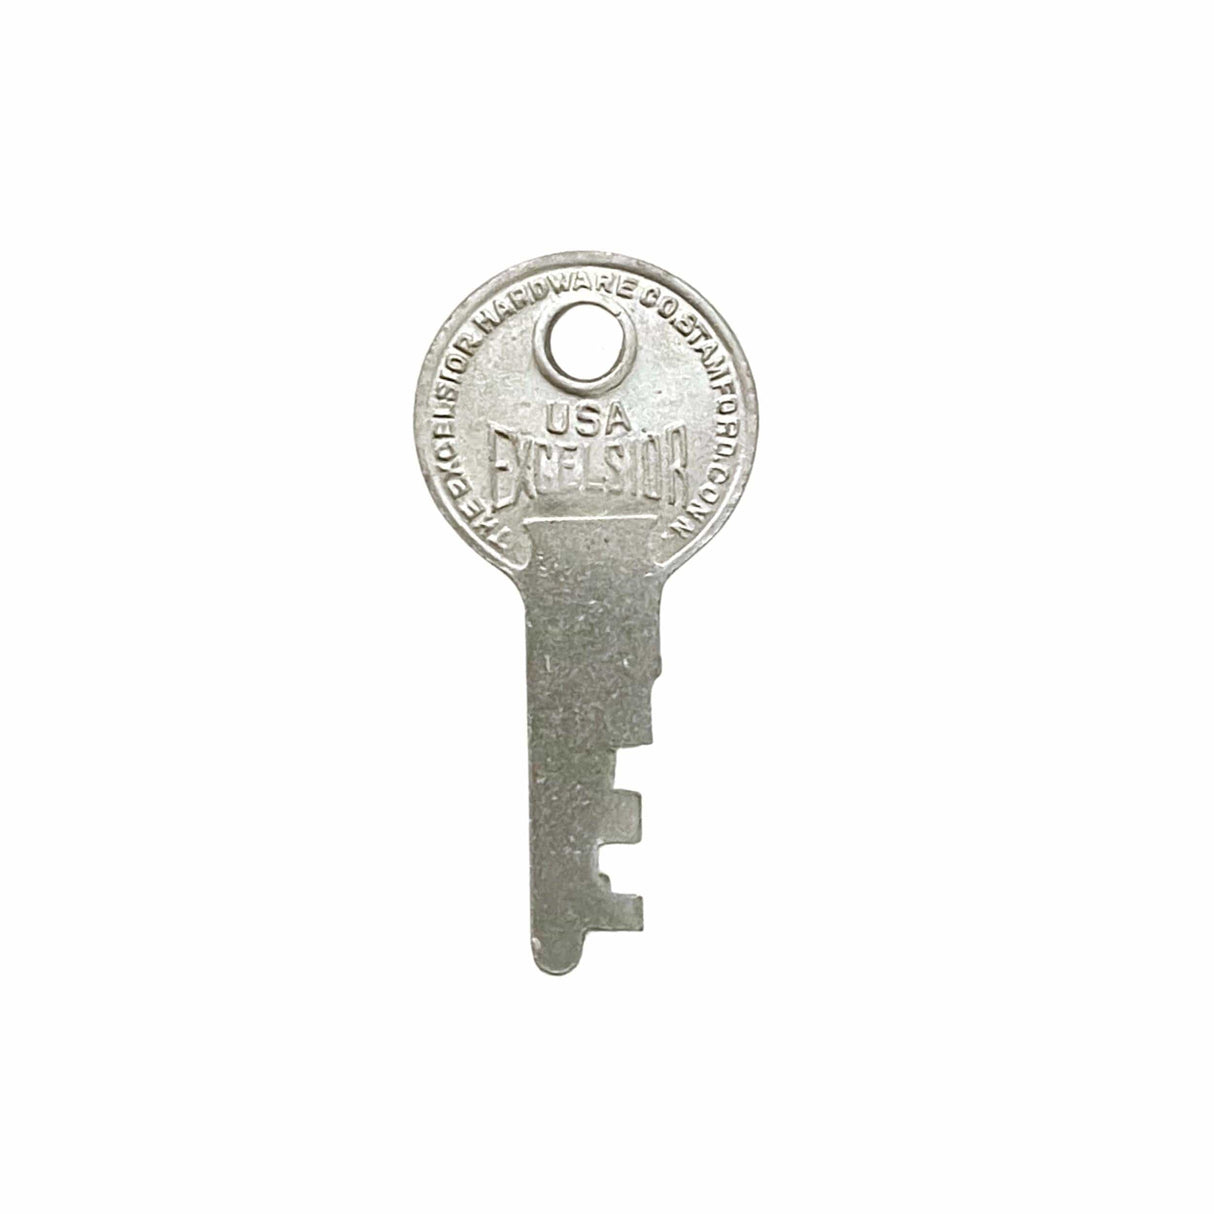 Ohio Travel Bag Excelsior No. 16 Lock Replacement Key, 5PK, #M-16K M-16K